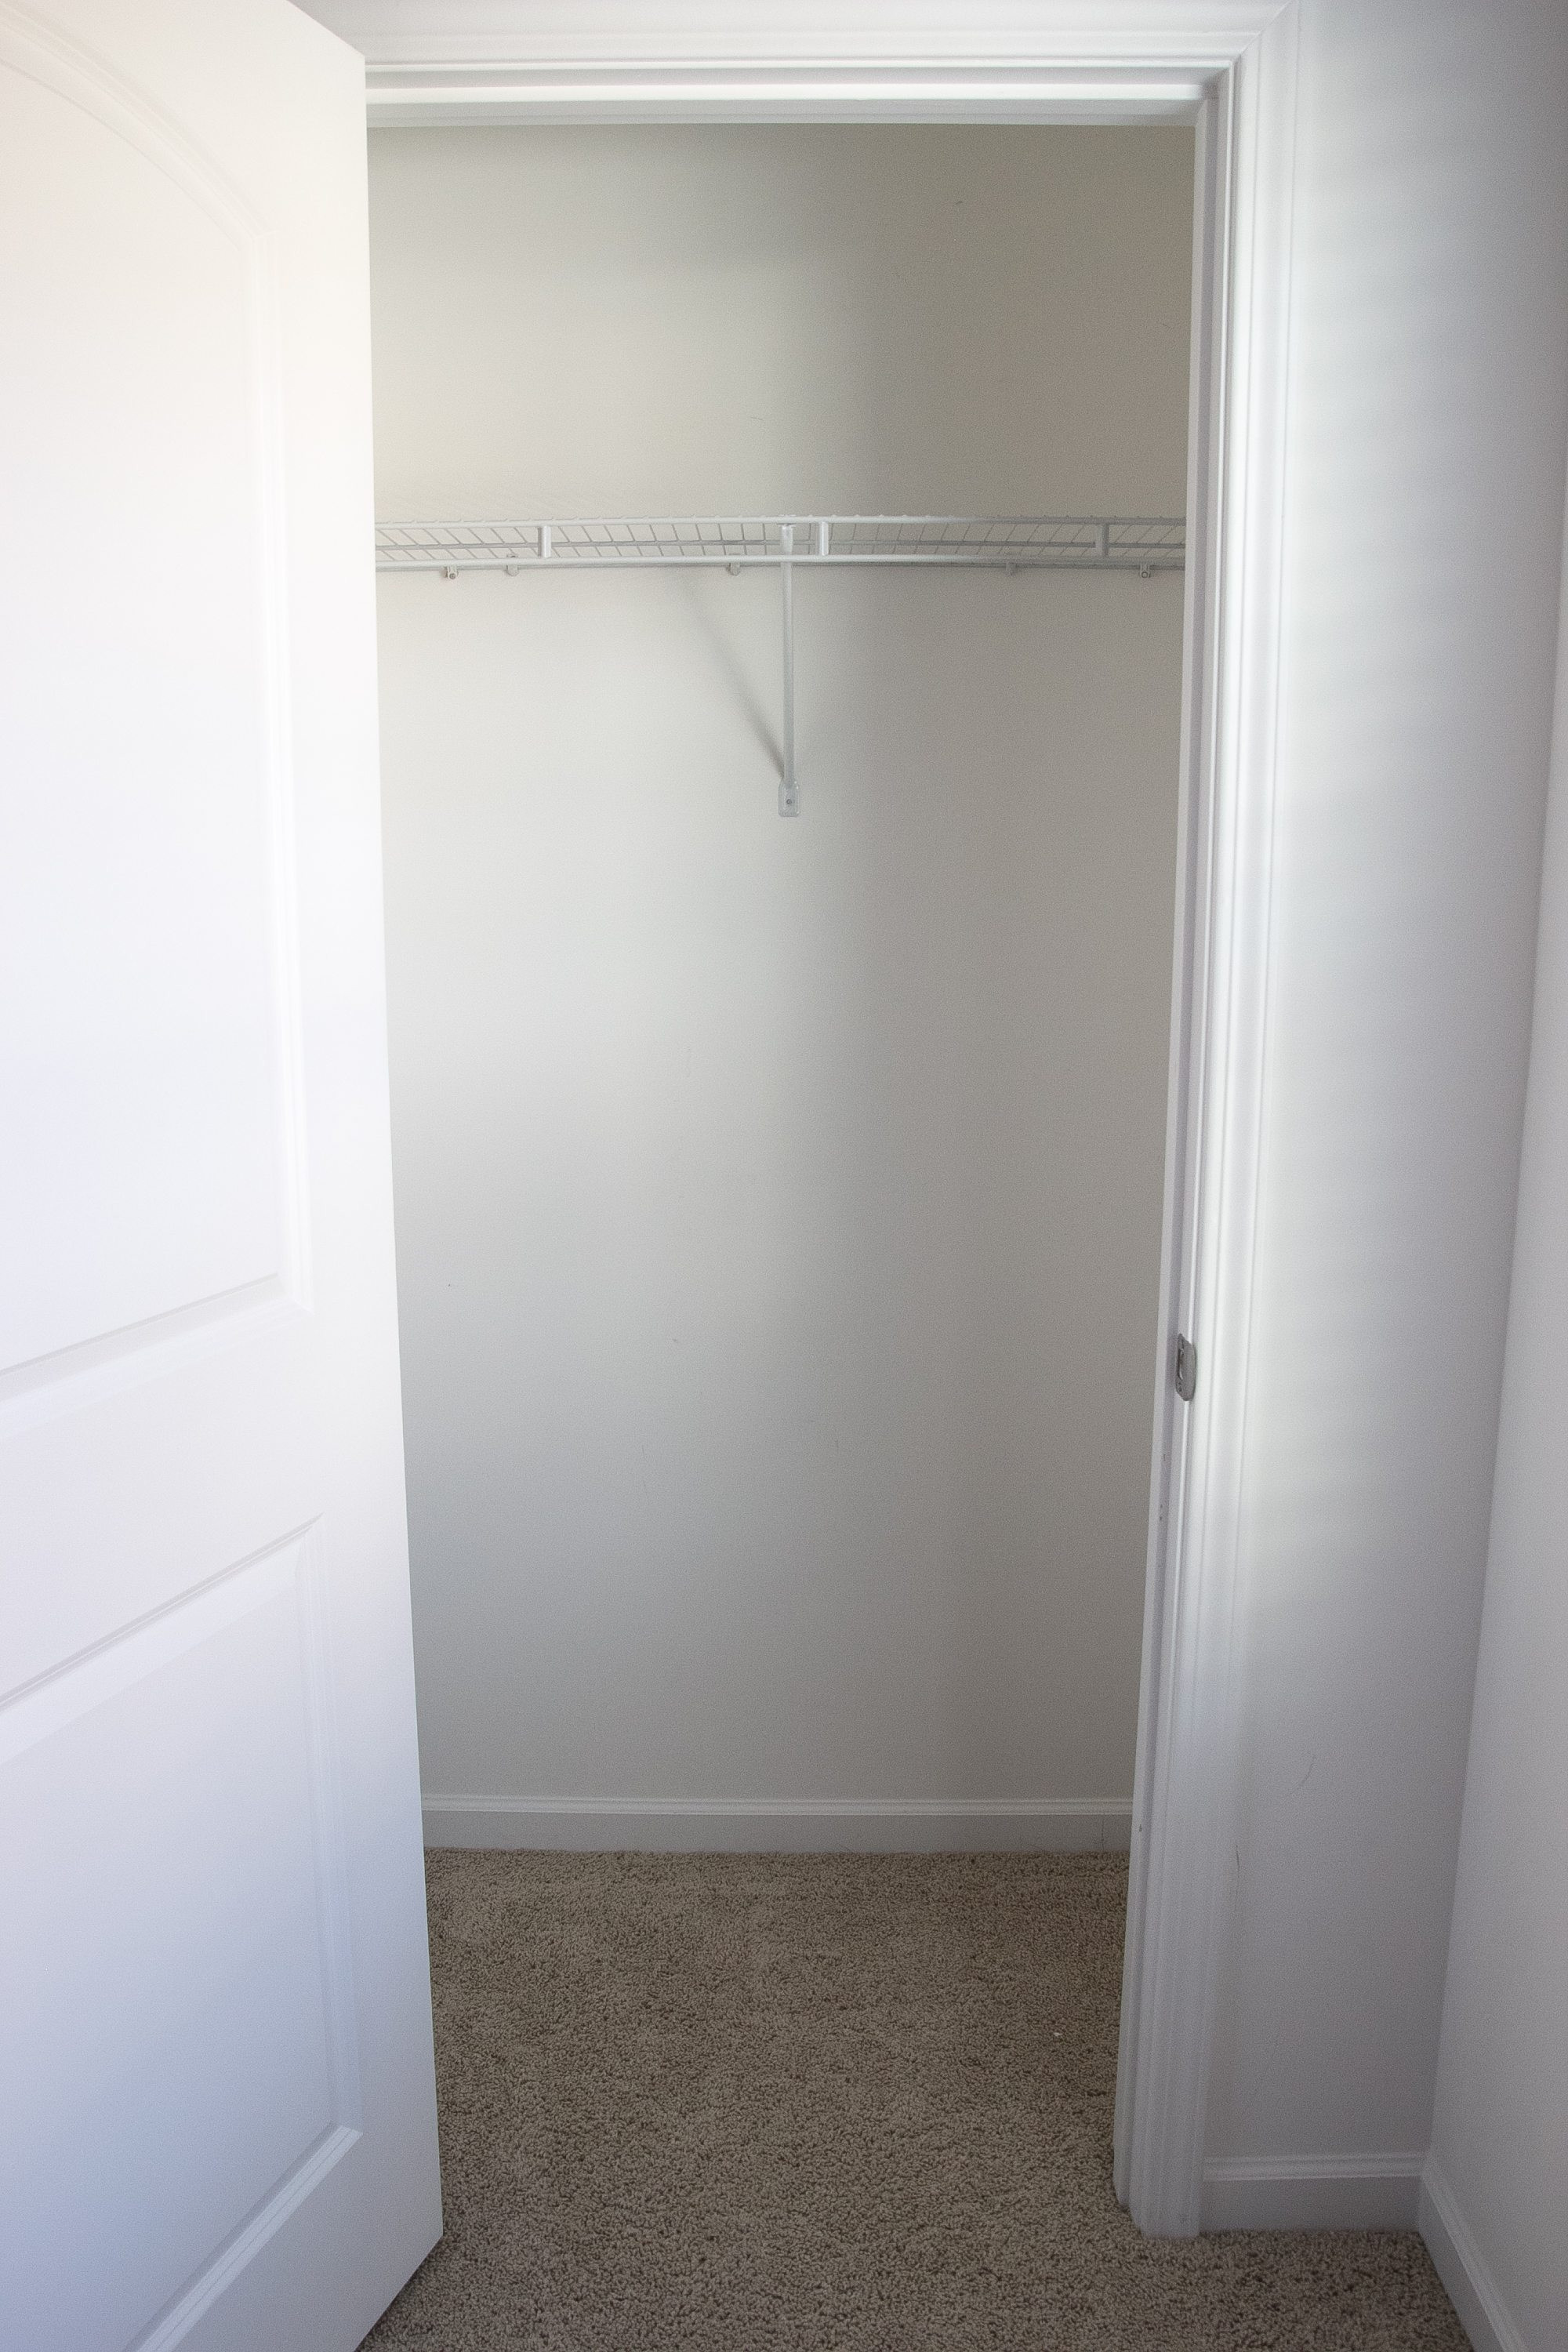 Best ideas about DIY Closet Shelves
. Save or Pin Basic DIY Closet Shelving Now.